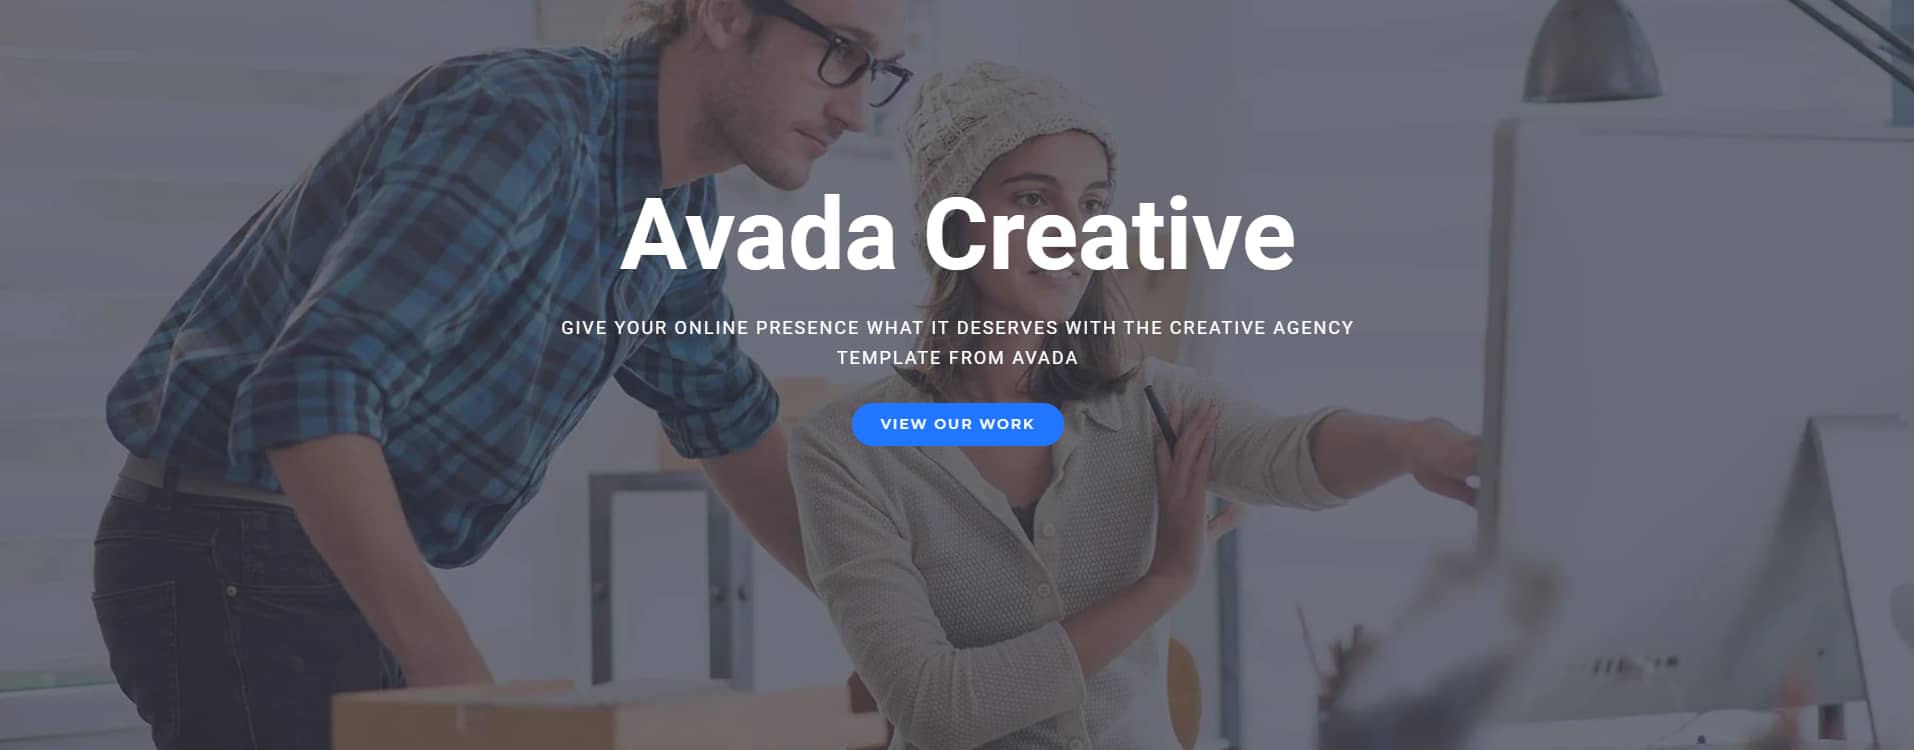 Avada Creative Hero